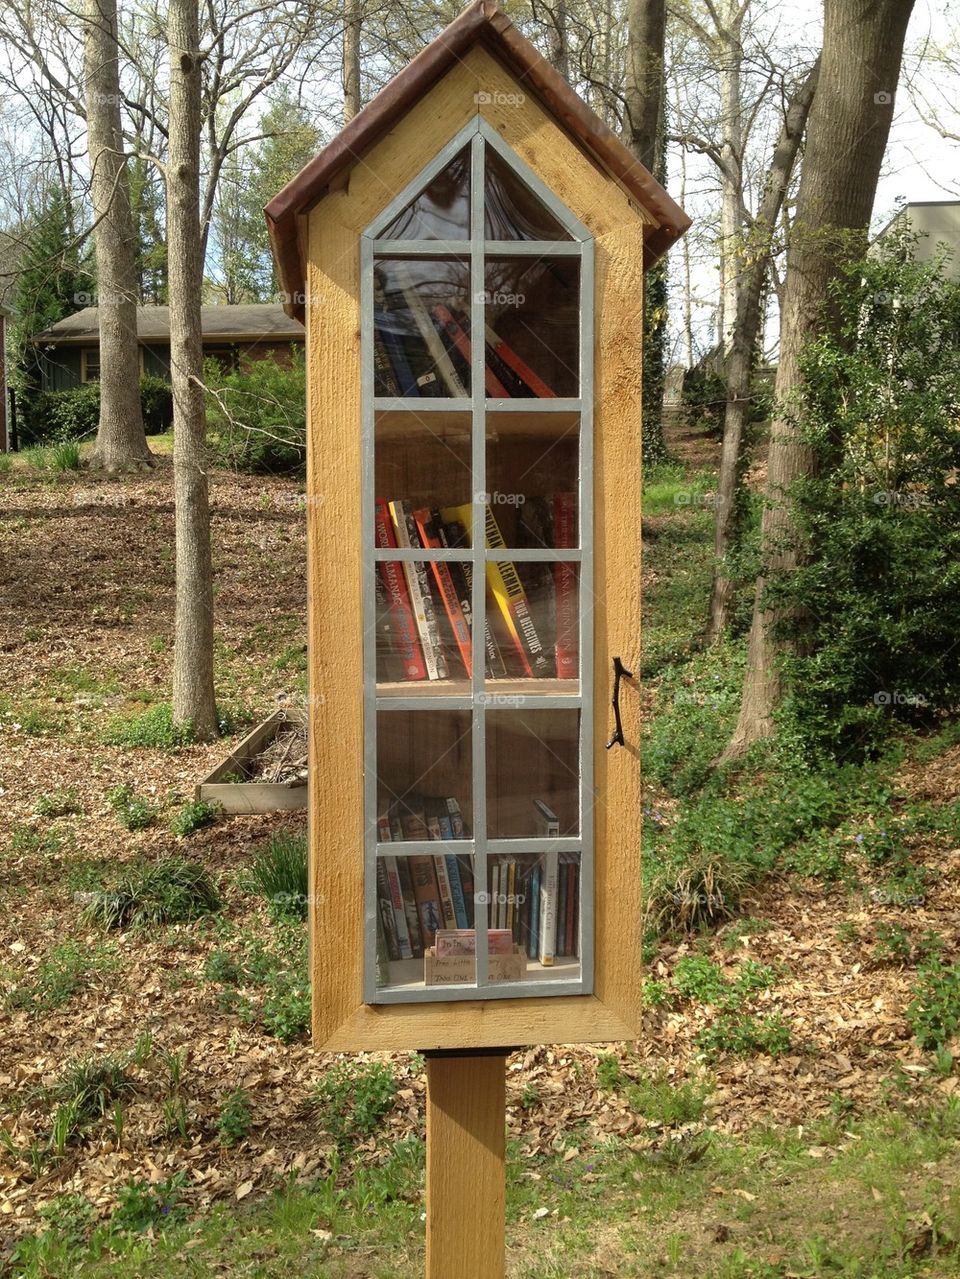 Neighborhood Sharing Library